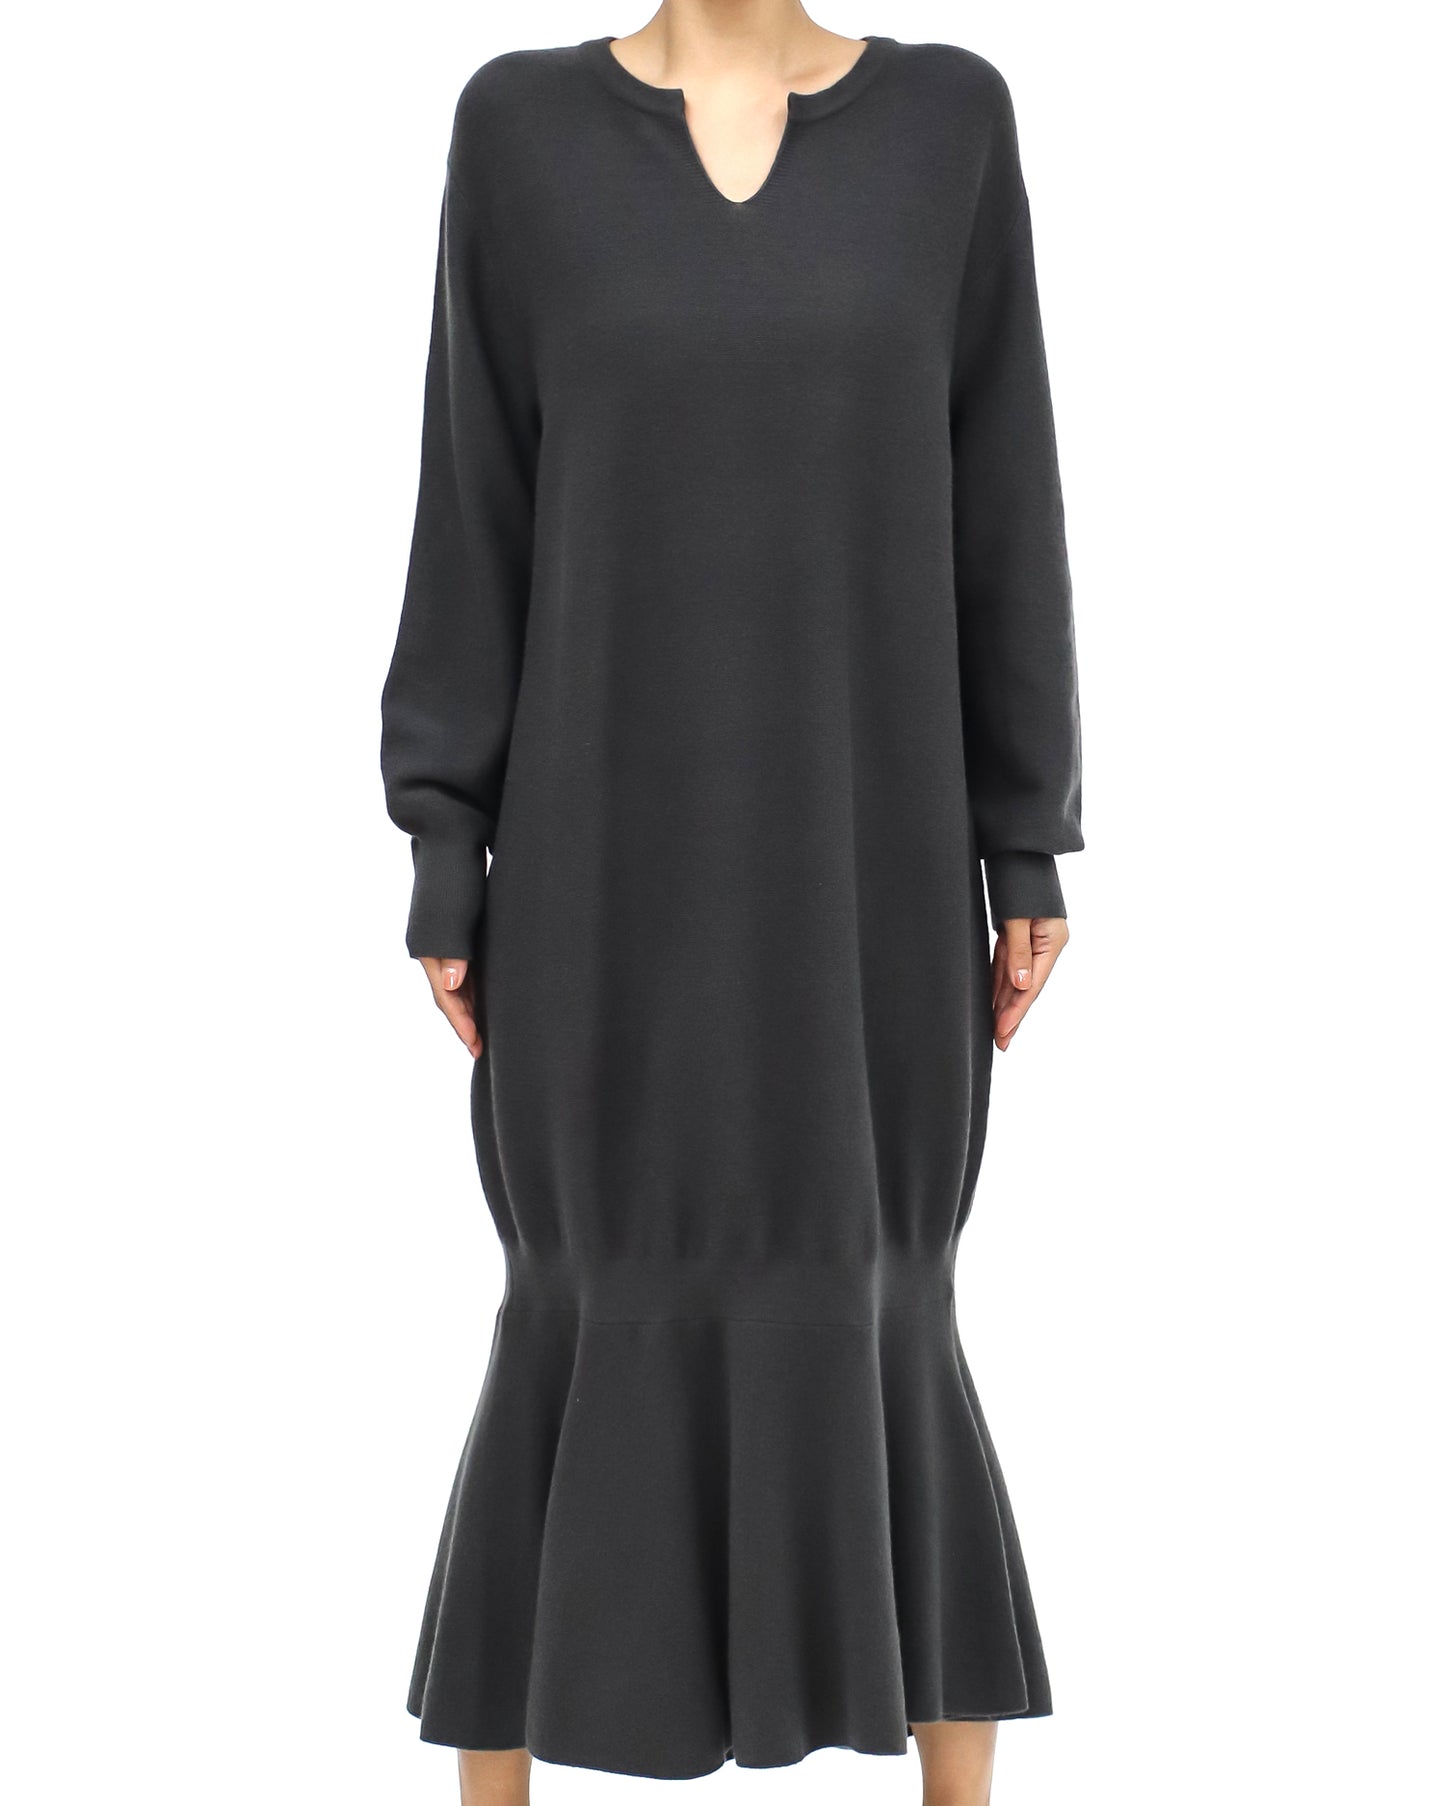 dark grey flare knitted dress *pre-order*